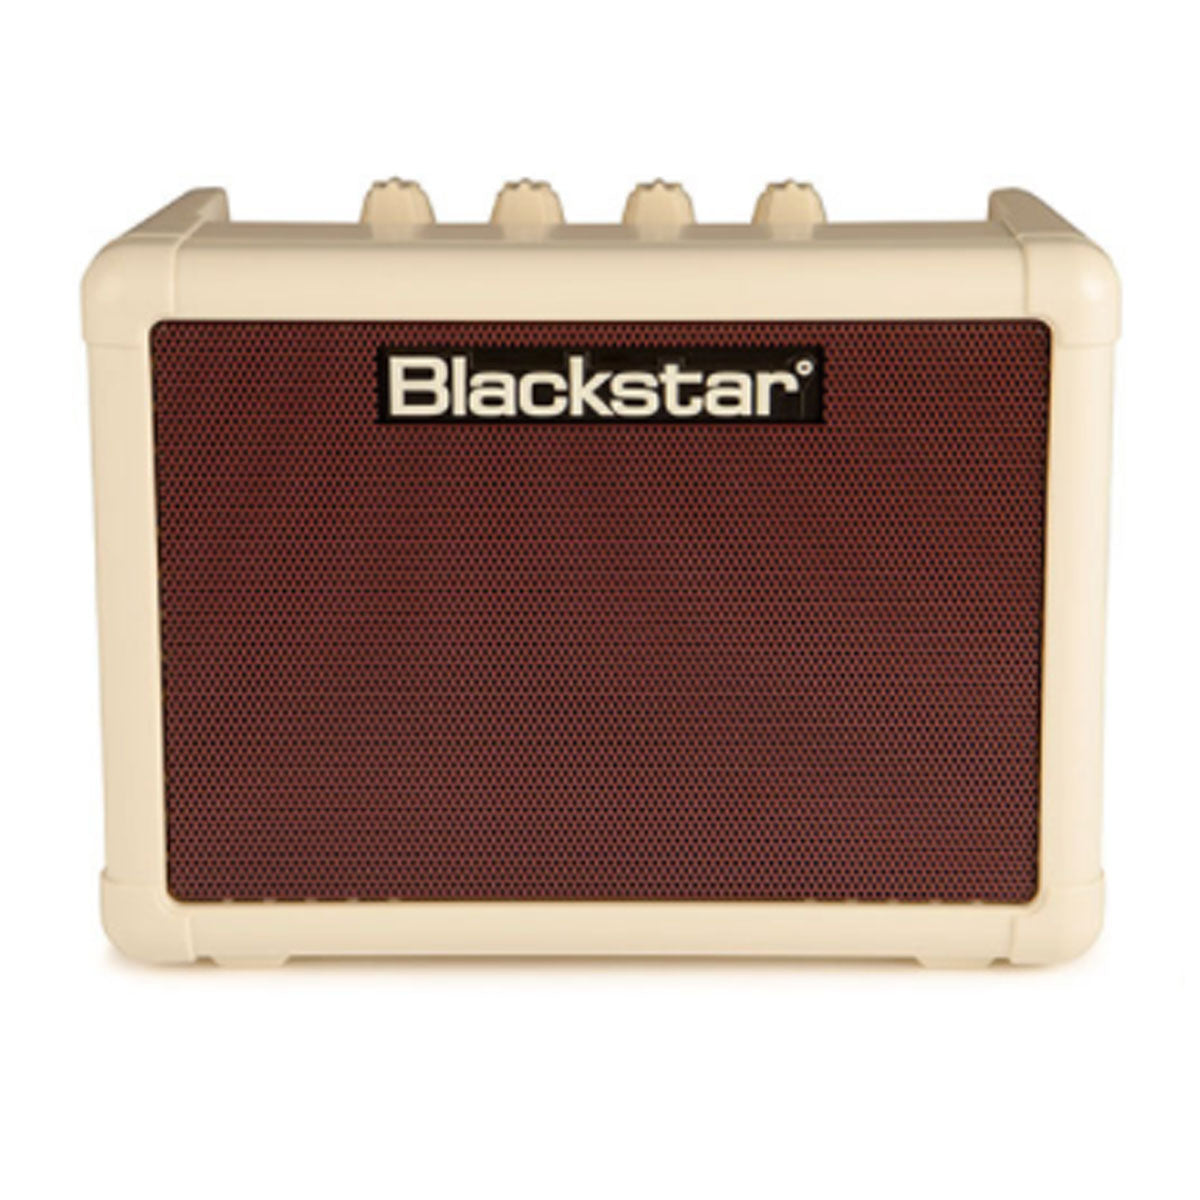 Blackstar FLY 3 Mini Guitar Amplifier Battery Powered Amp Vintage